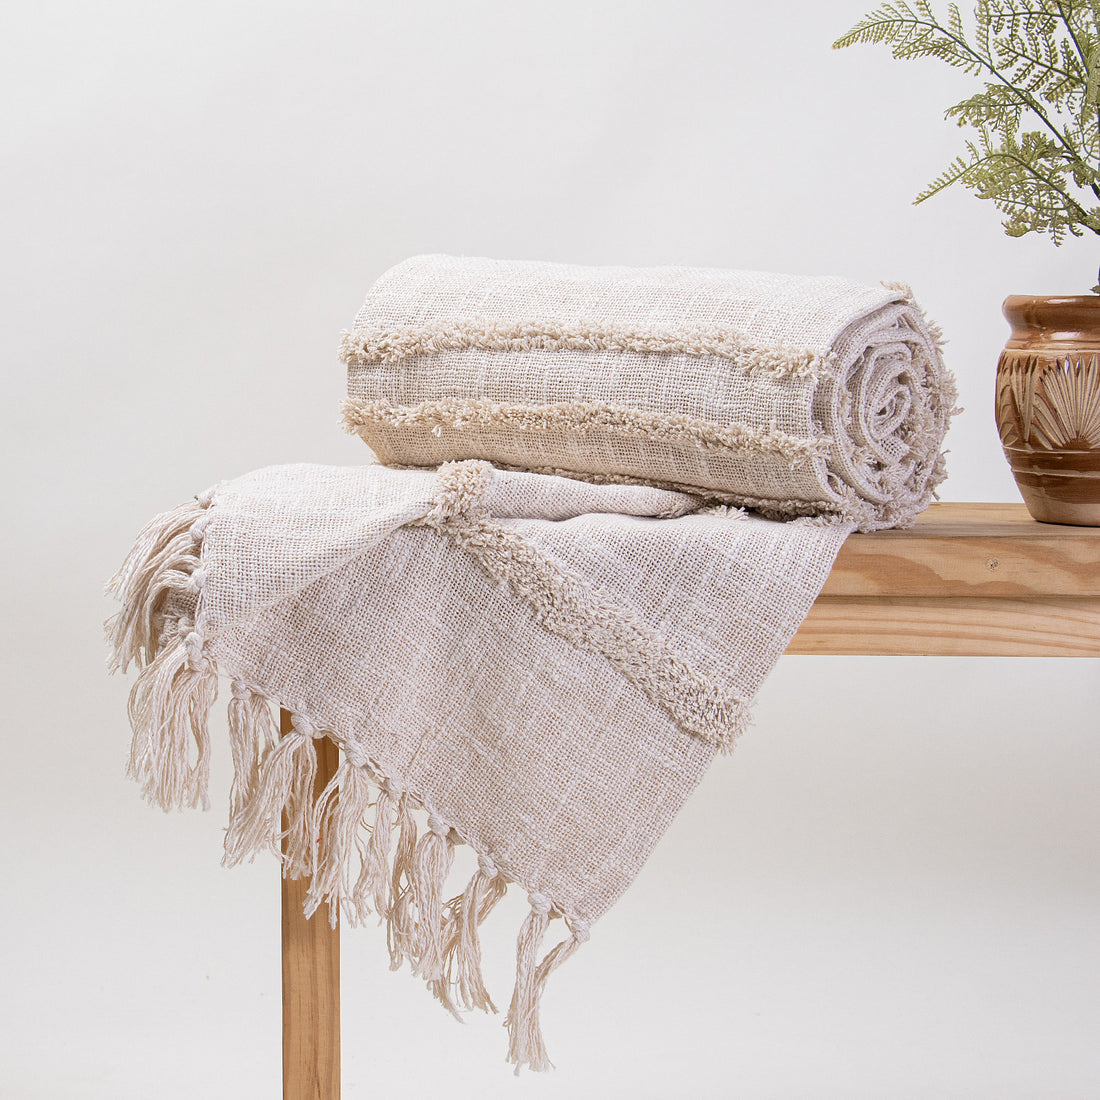 Handmade Super Soft Tufted Throw Blanket For Home Decor